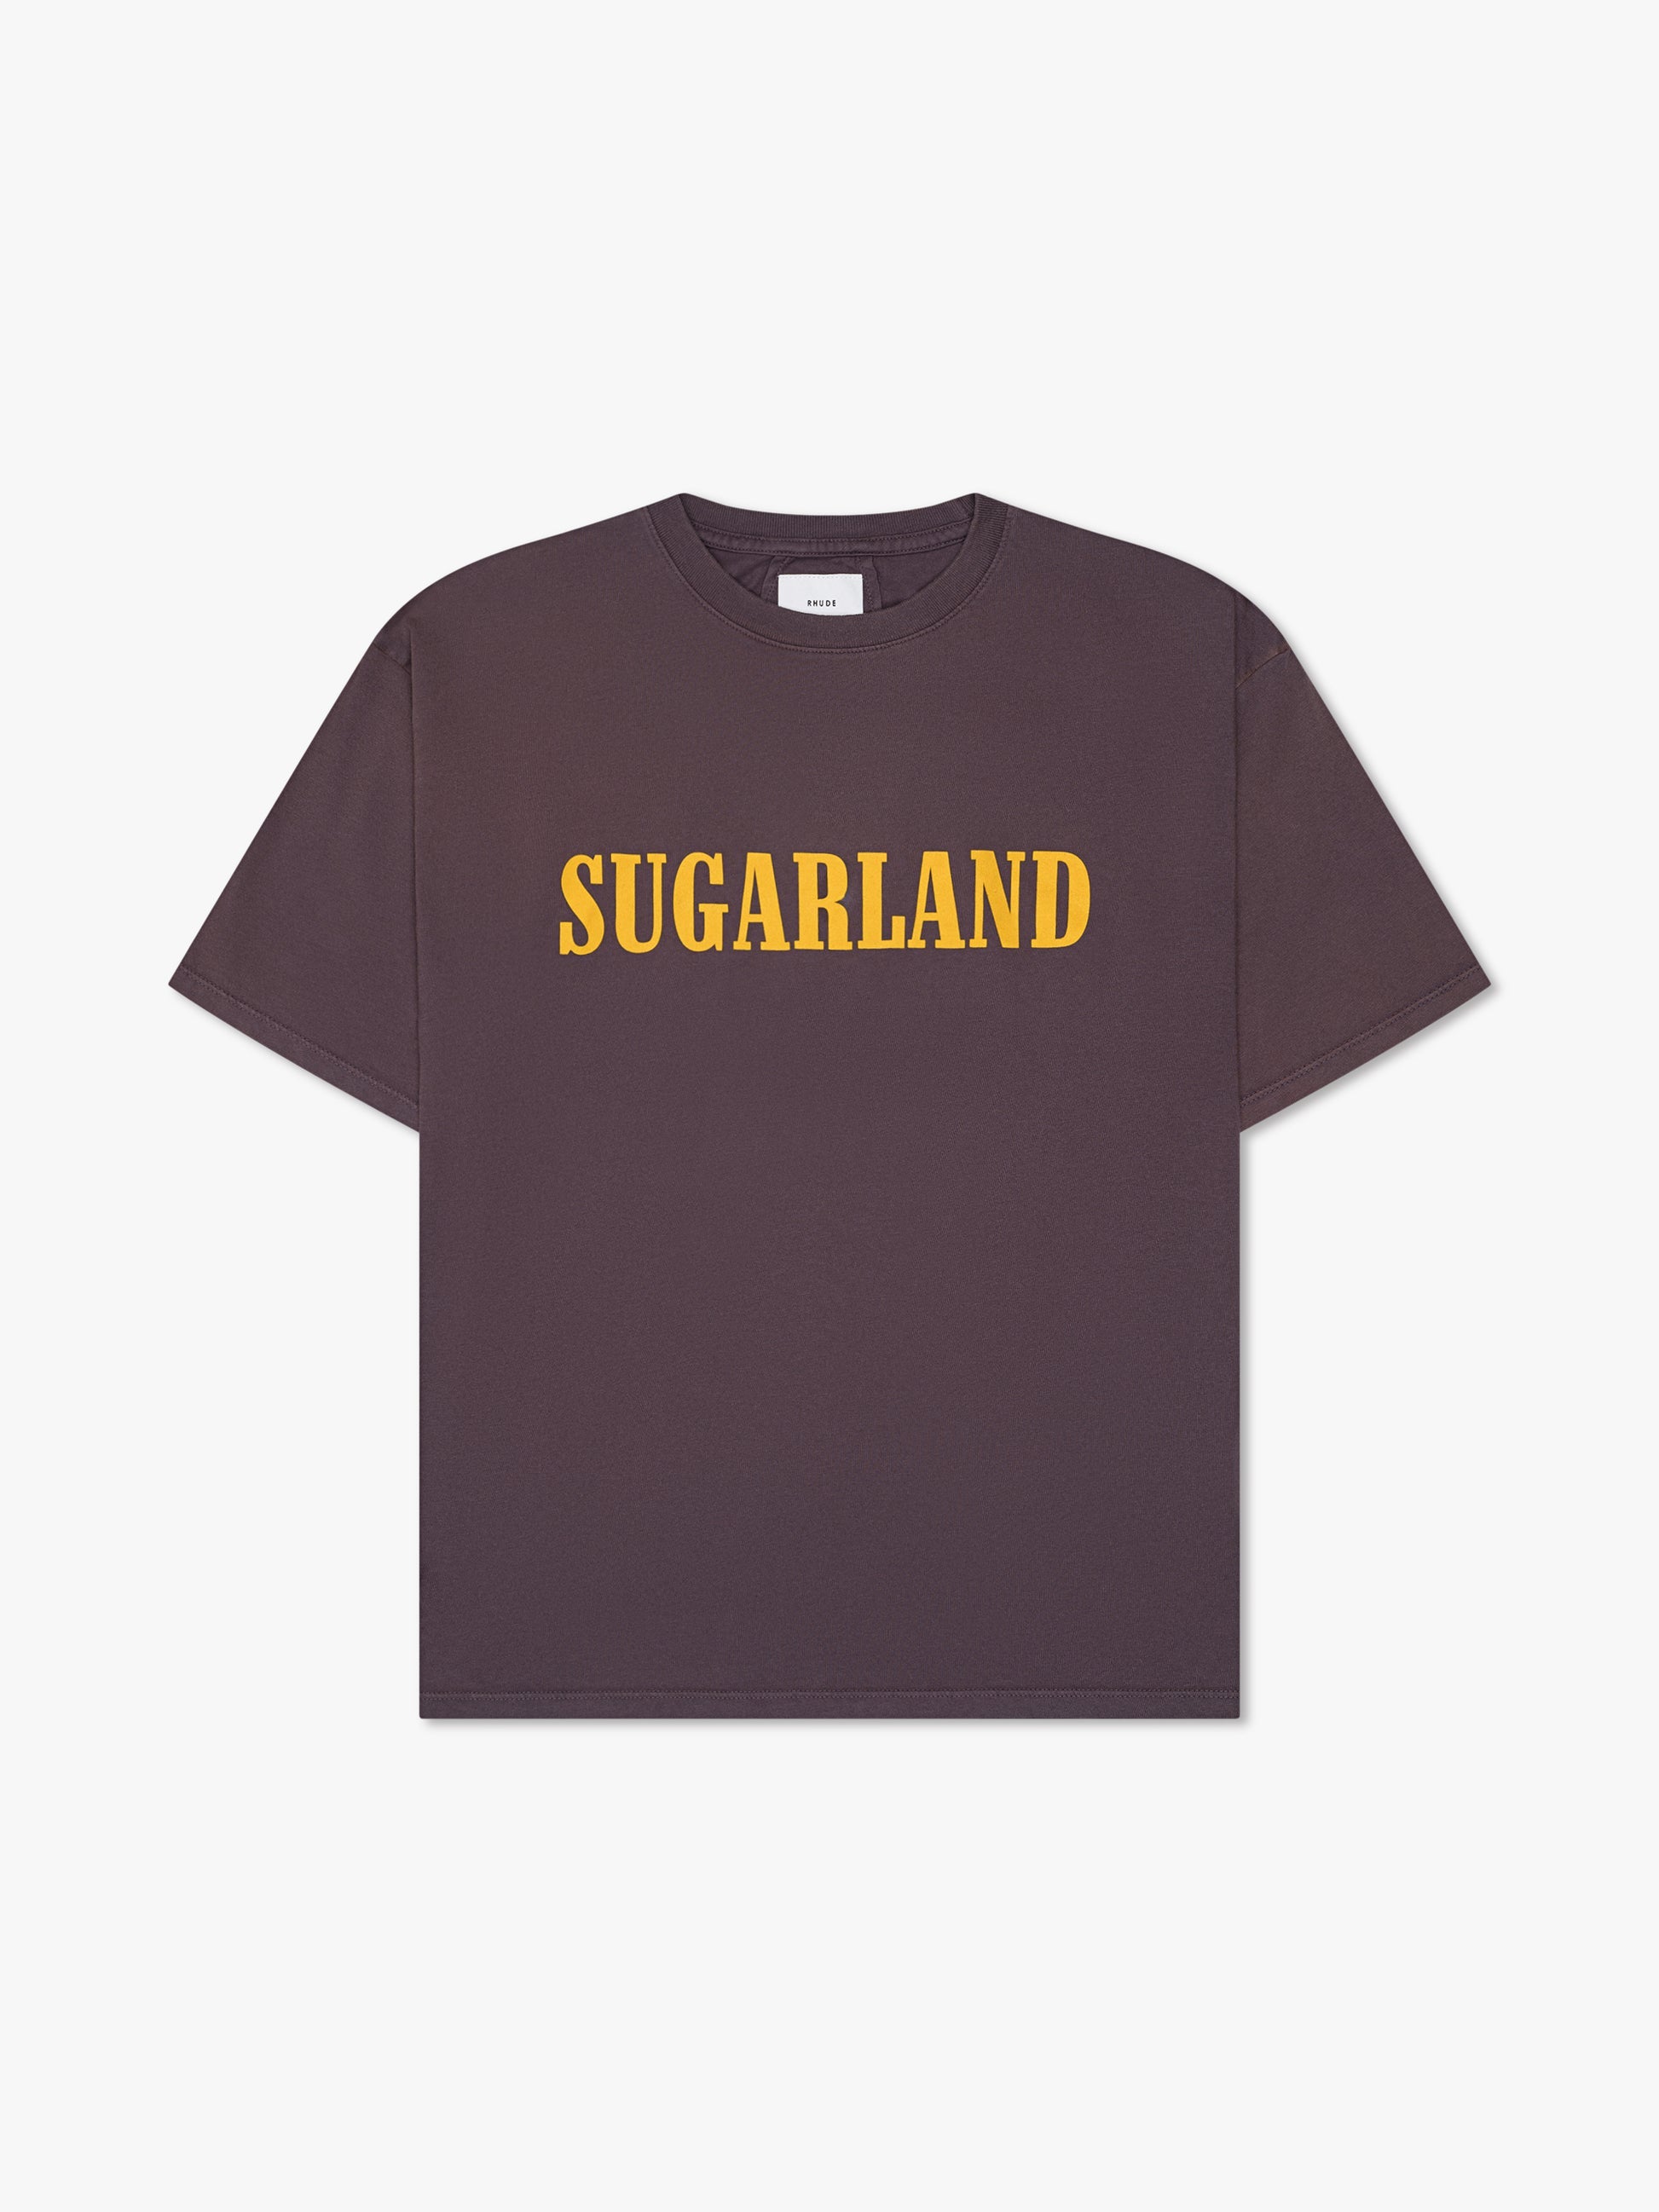 SUGARLAND TEE - SUNDRY BLACK